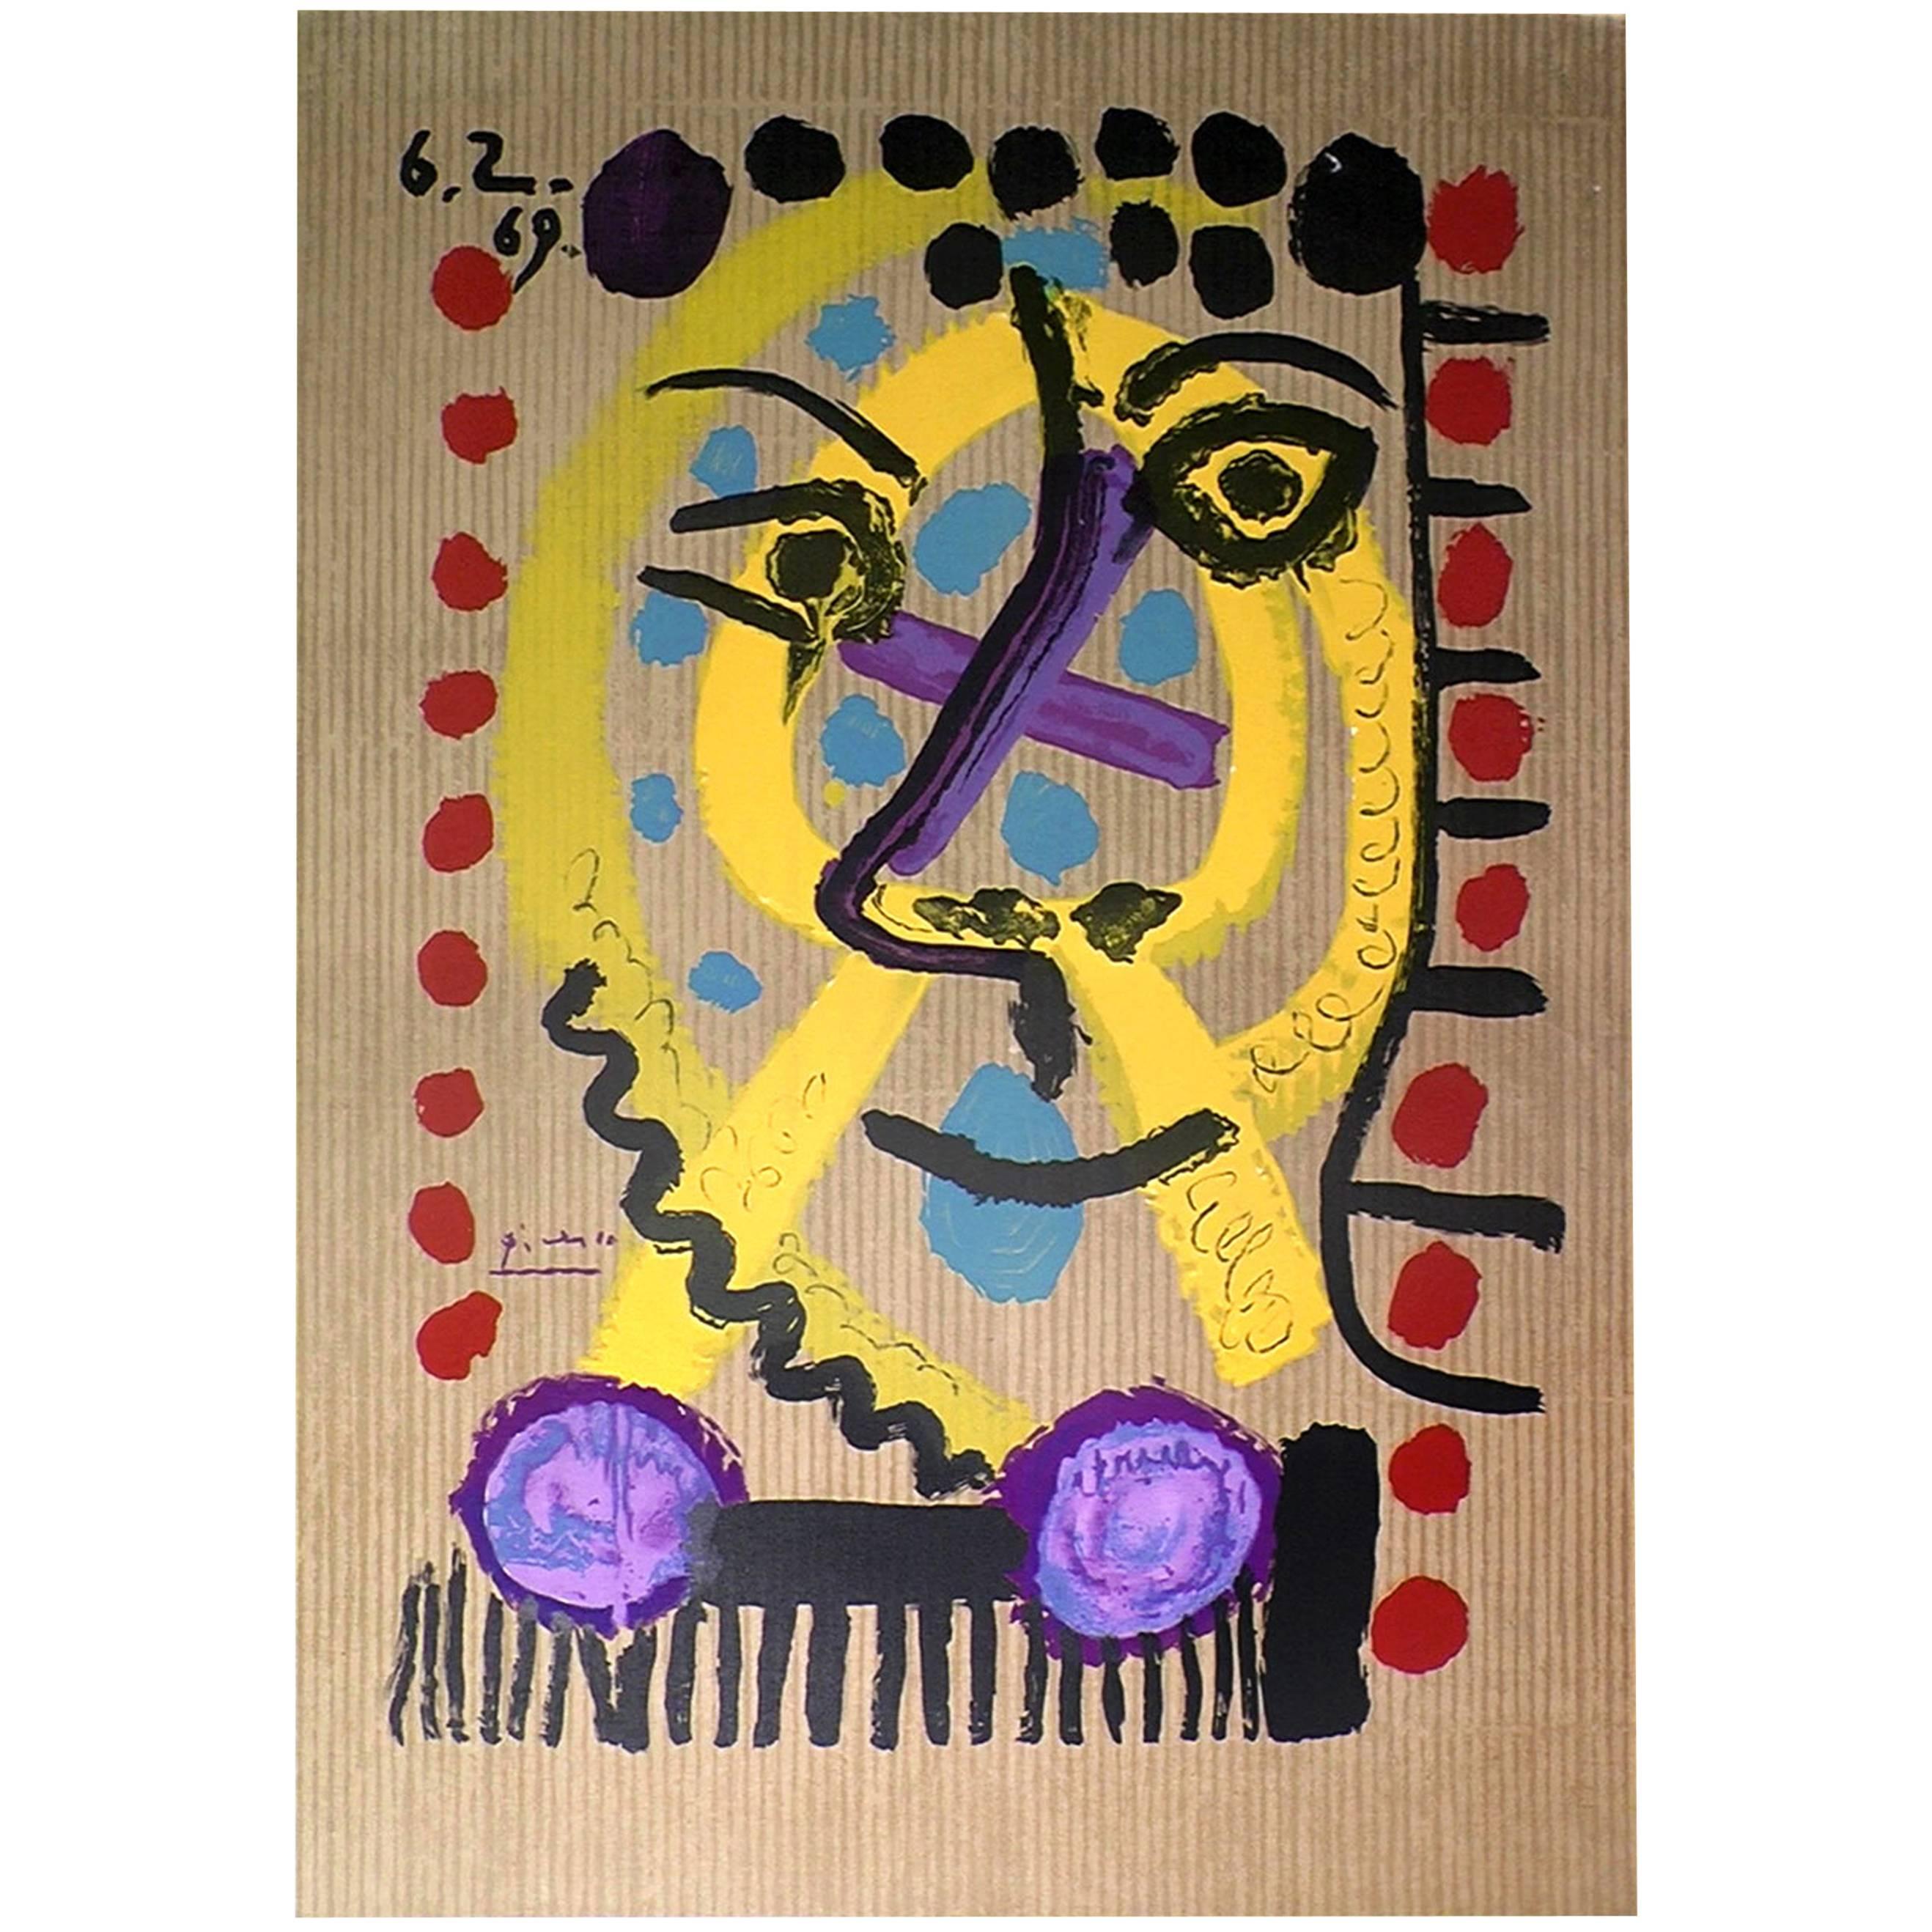 Picasso Original Litograph Portrait Imaginaire, 1969, signed 